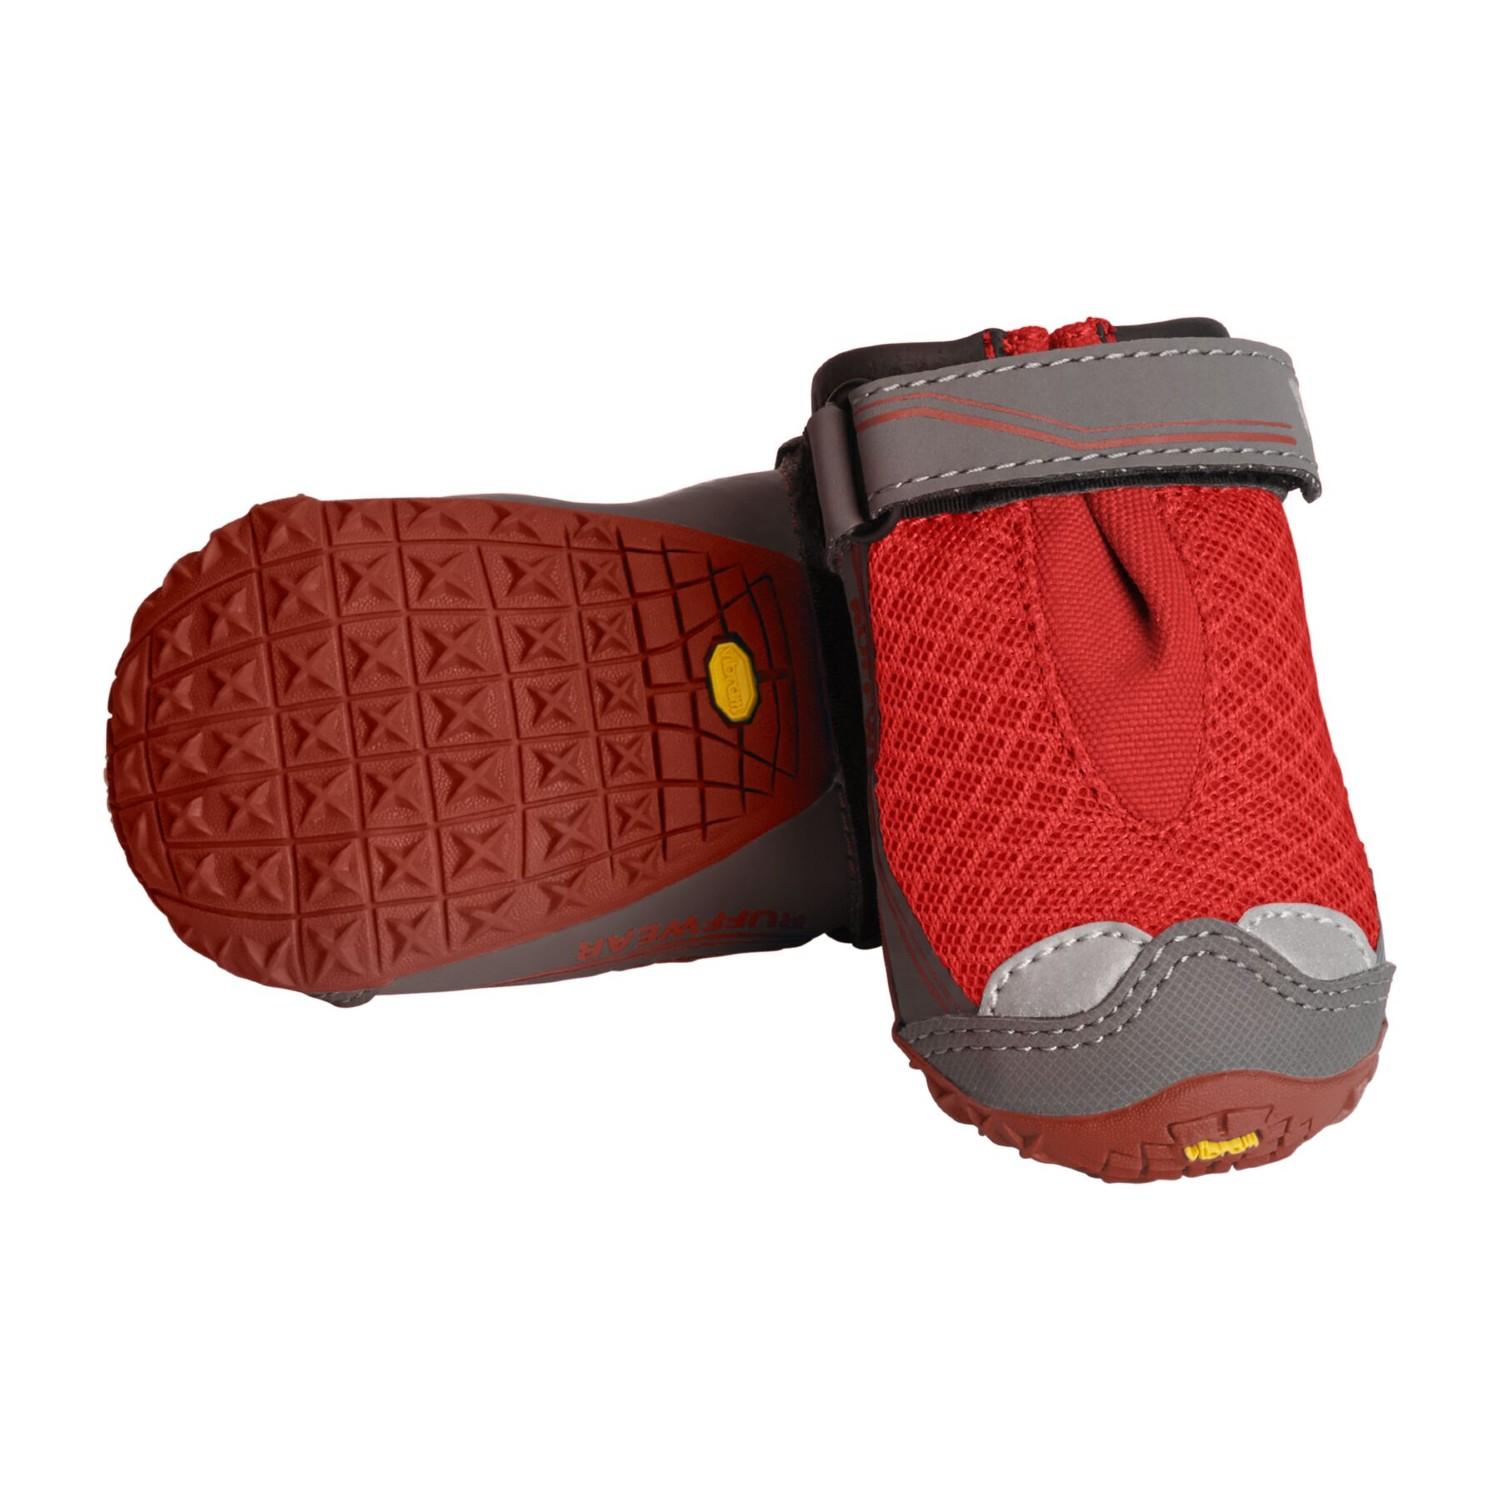 RuffWear Grip Trex Dog Boots - 2 Pack - Red Sumac